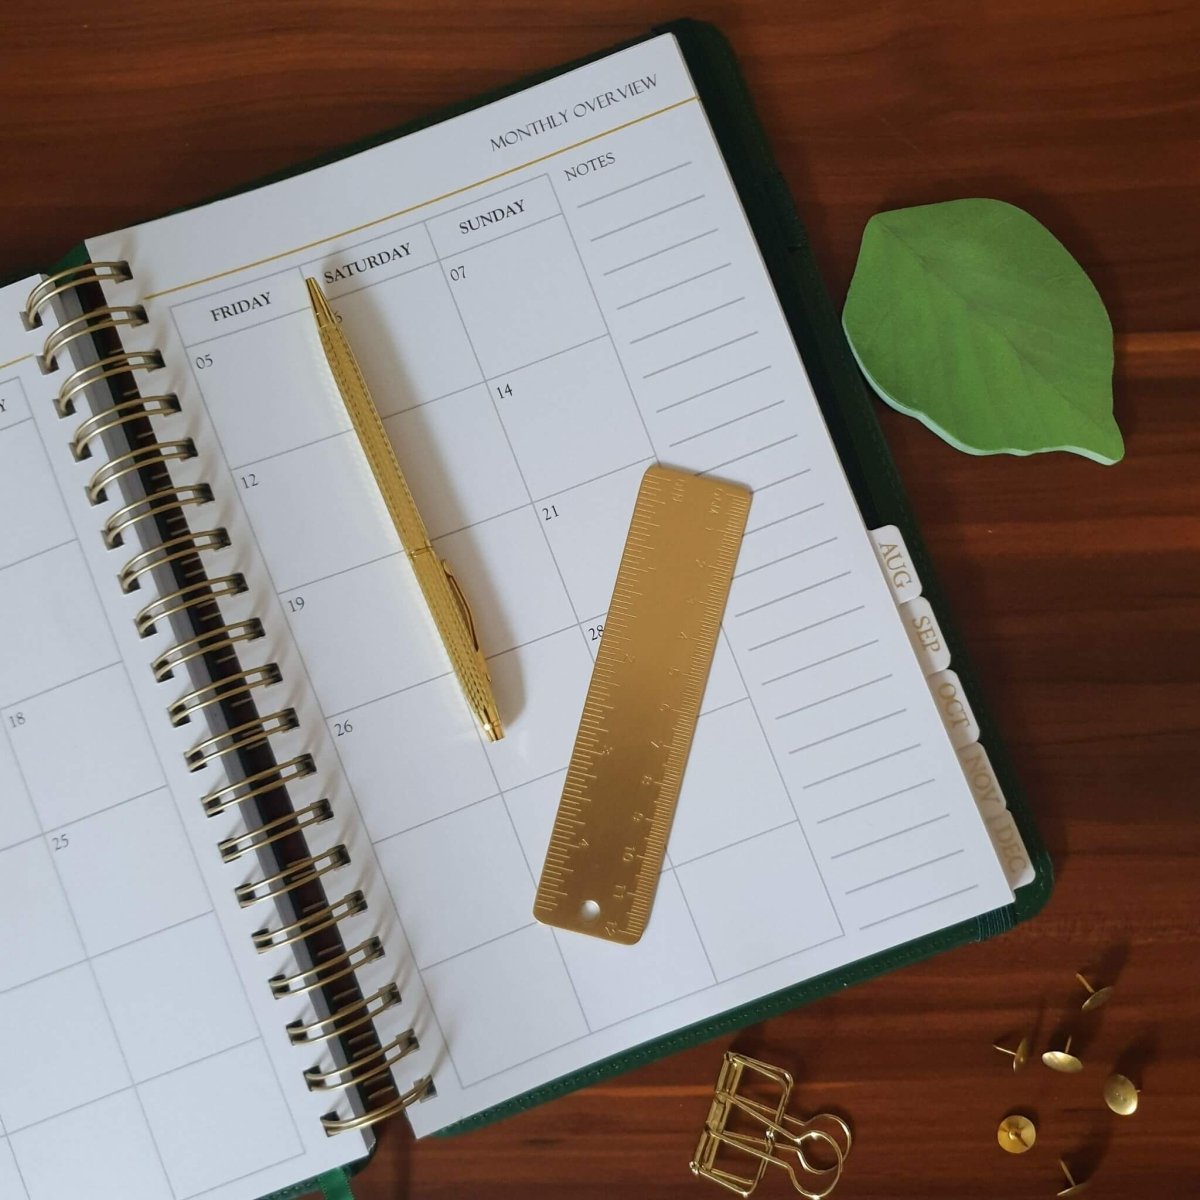 leaf sticky notes with planner, pen and ruler on desk